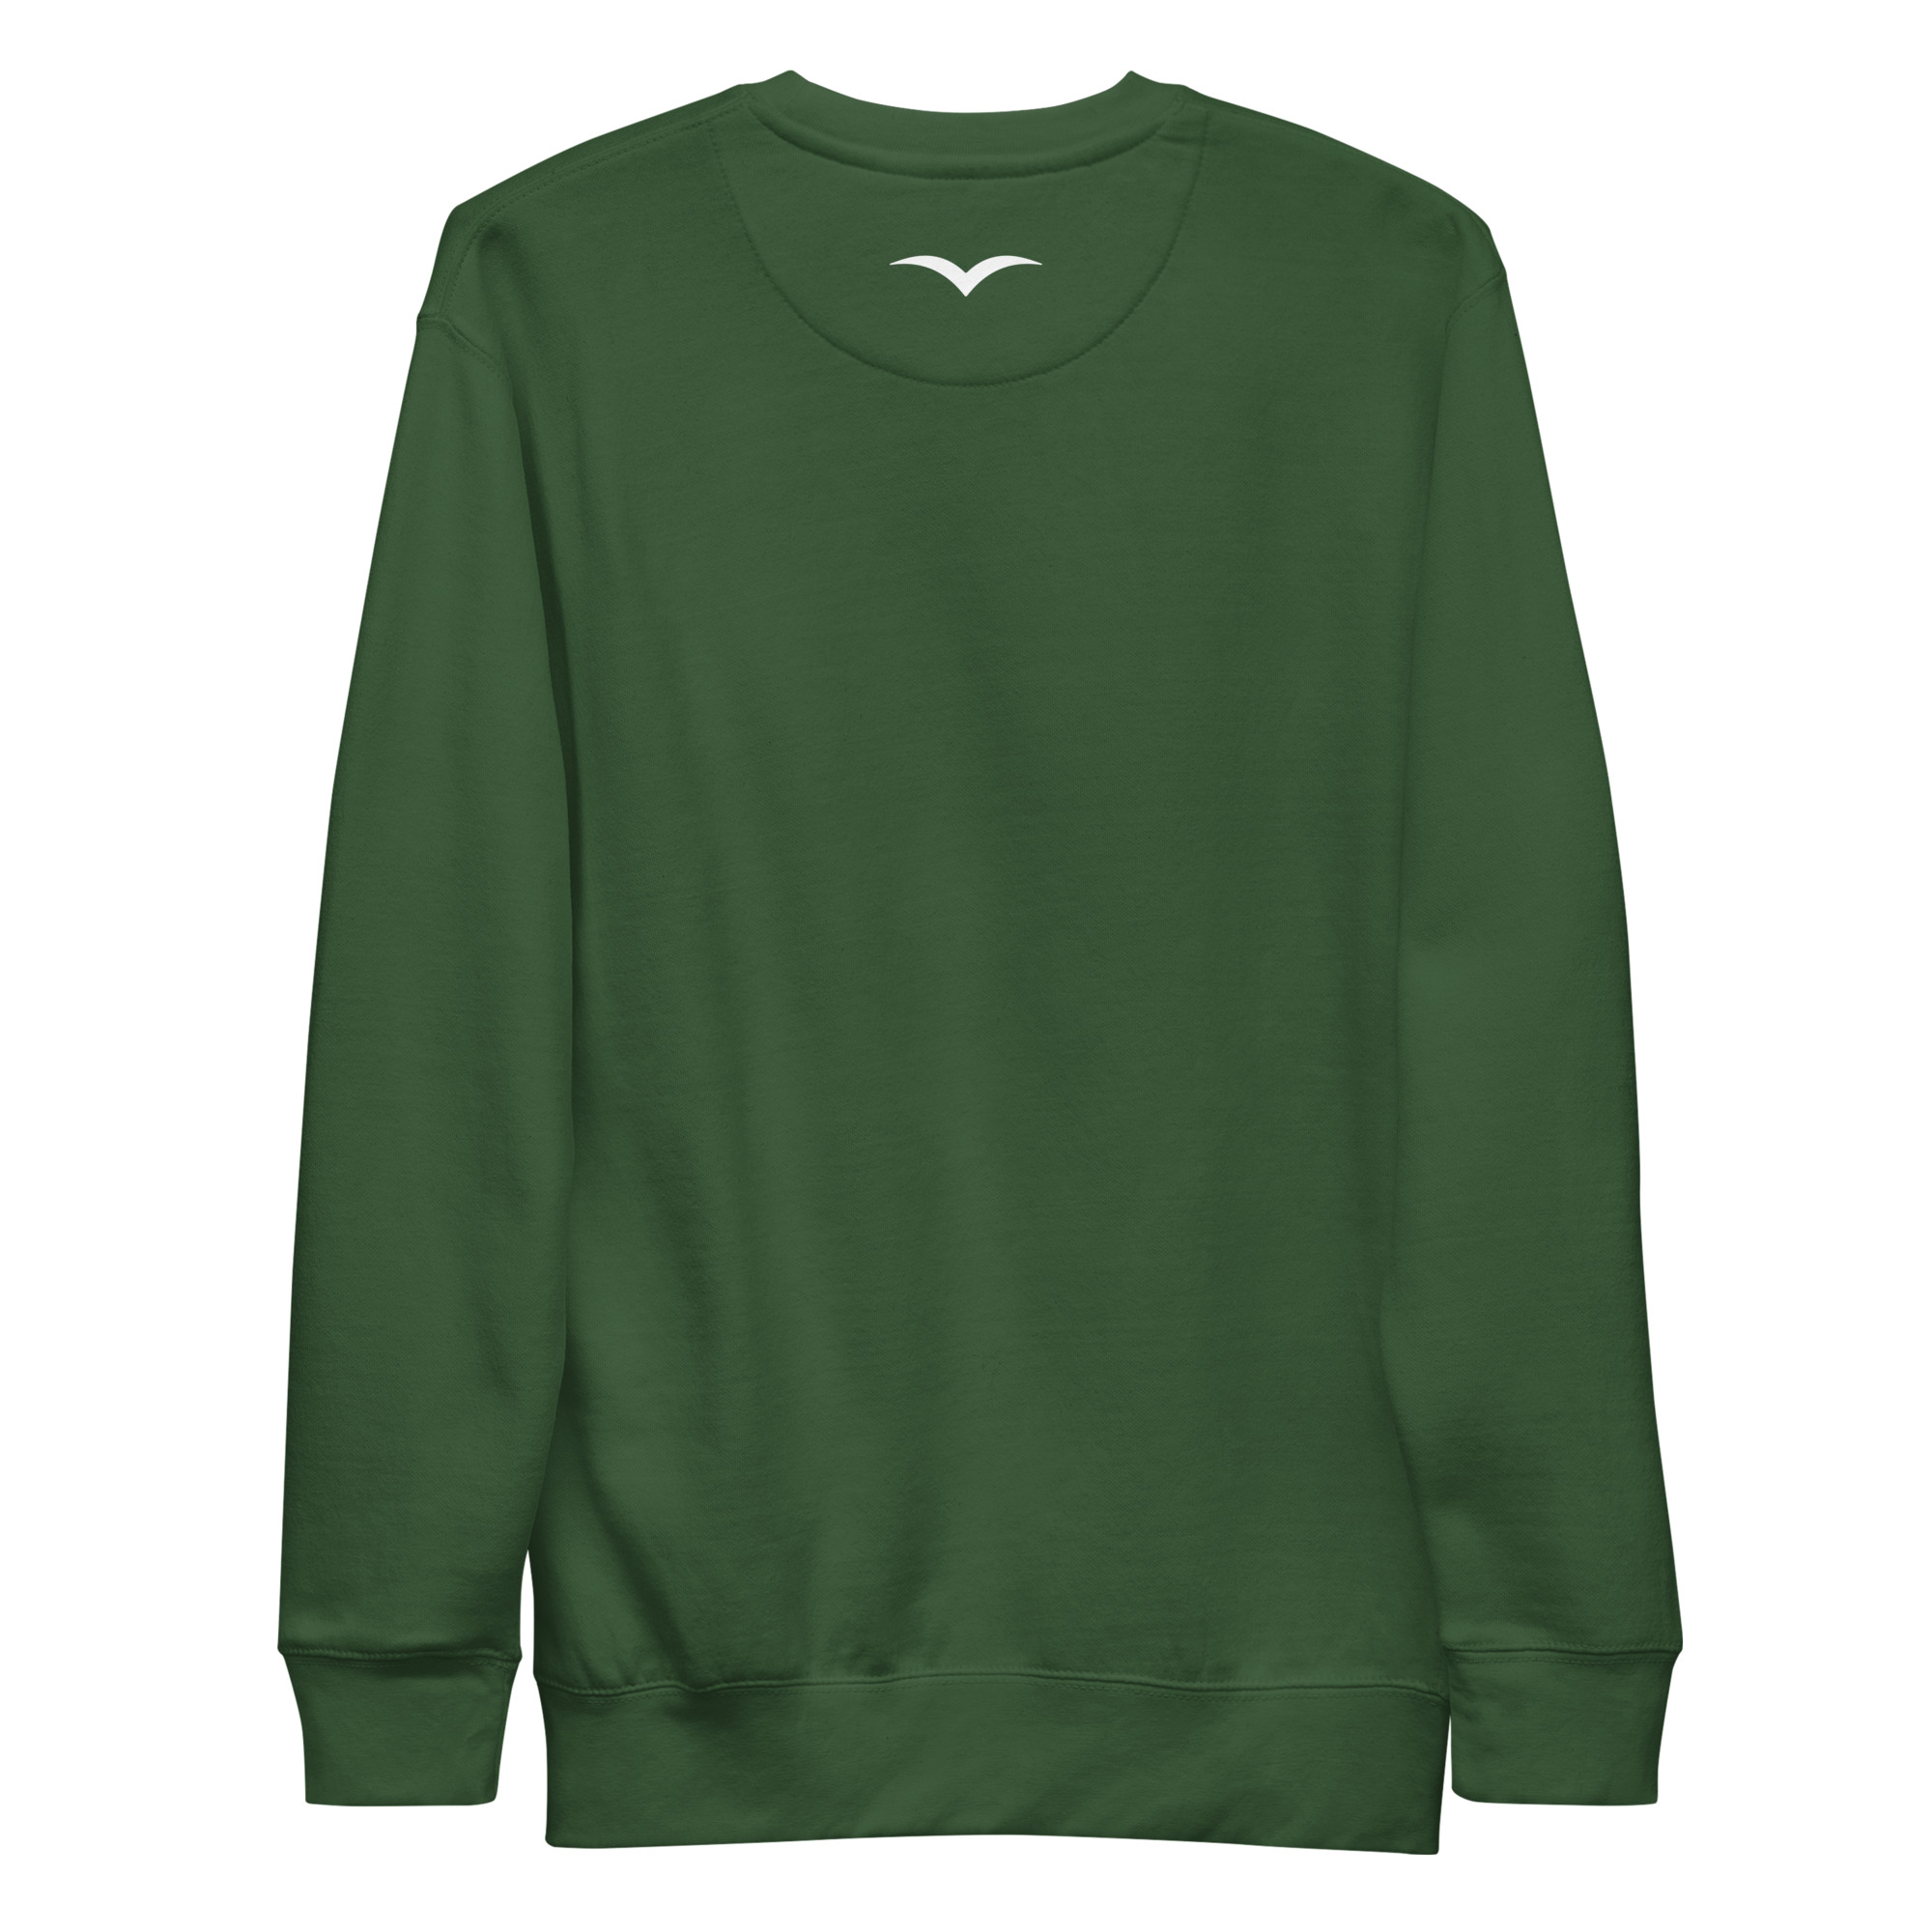 unisex-premium-sweatshirt-forest-green-back-64136c9fb1f9f.jpg